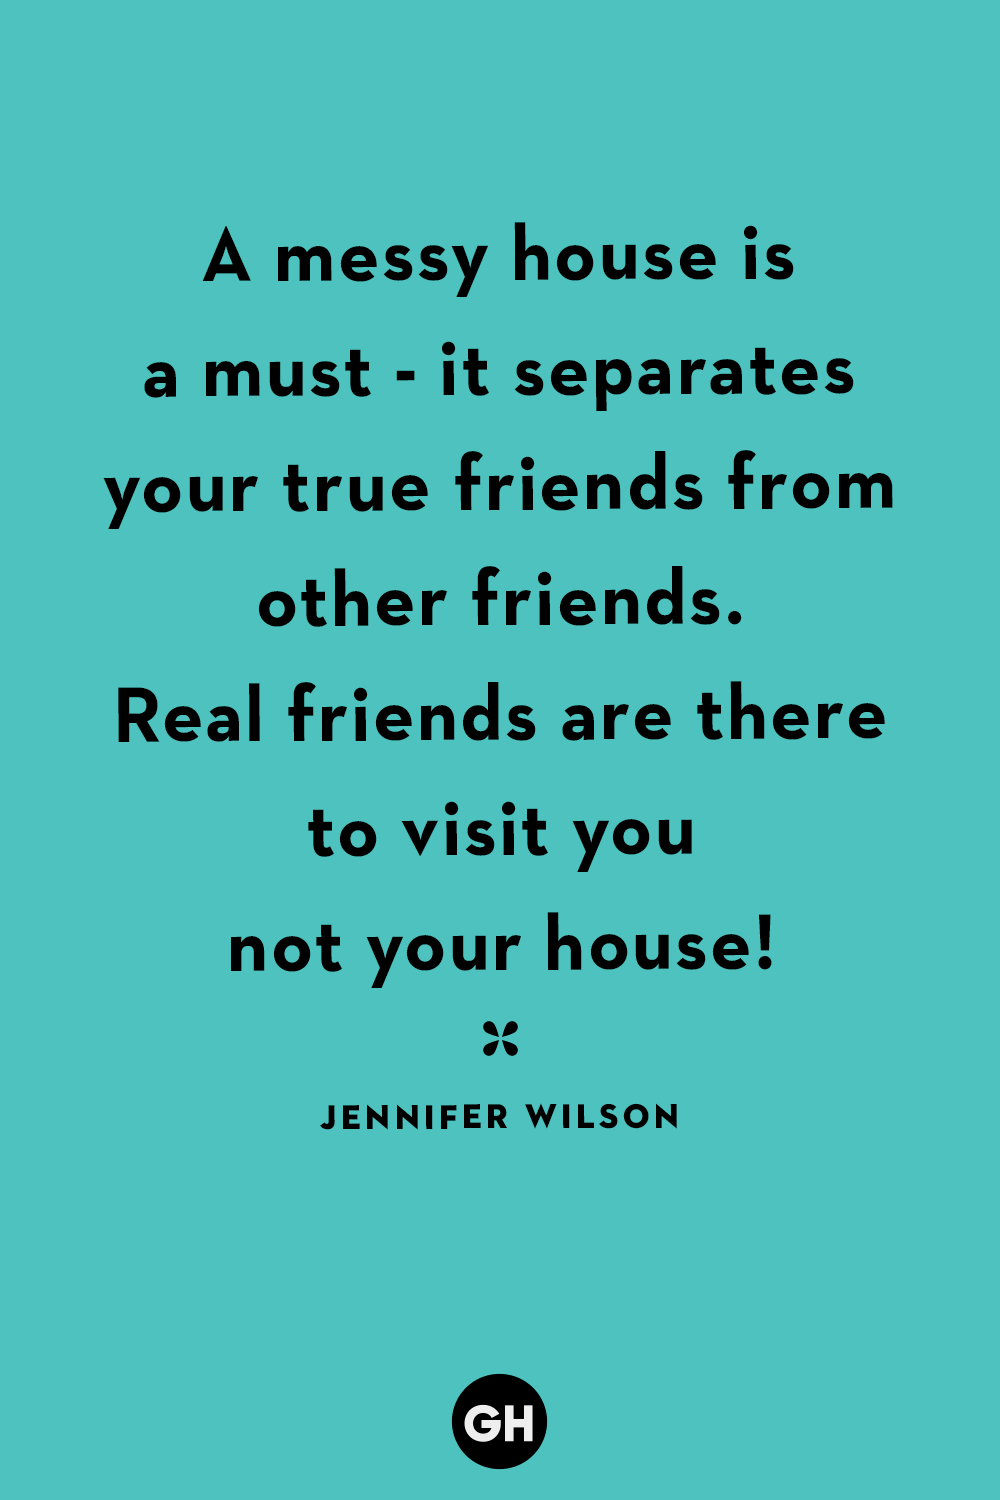 true friendship quotes